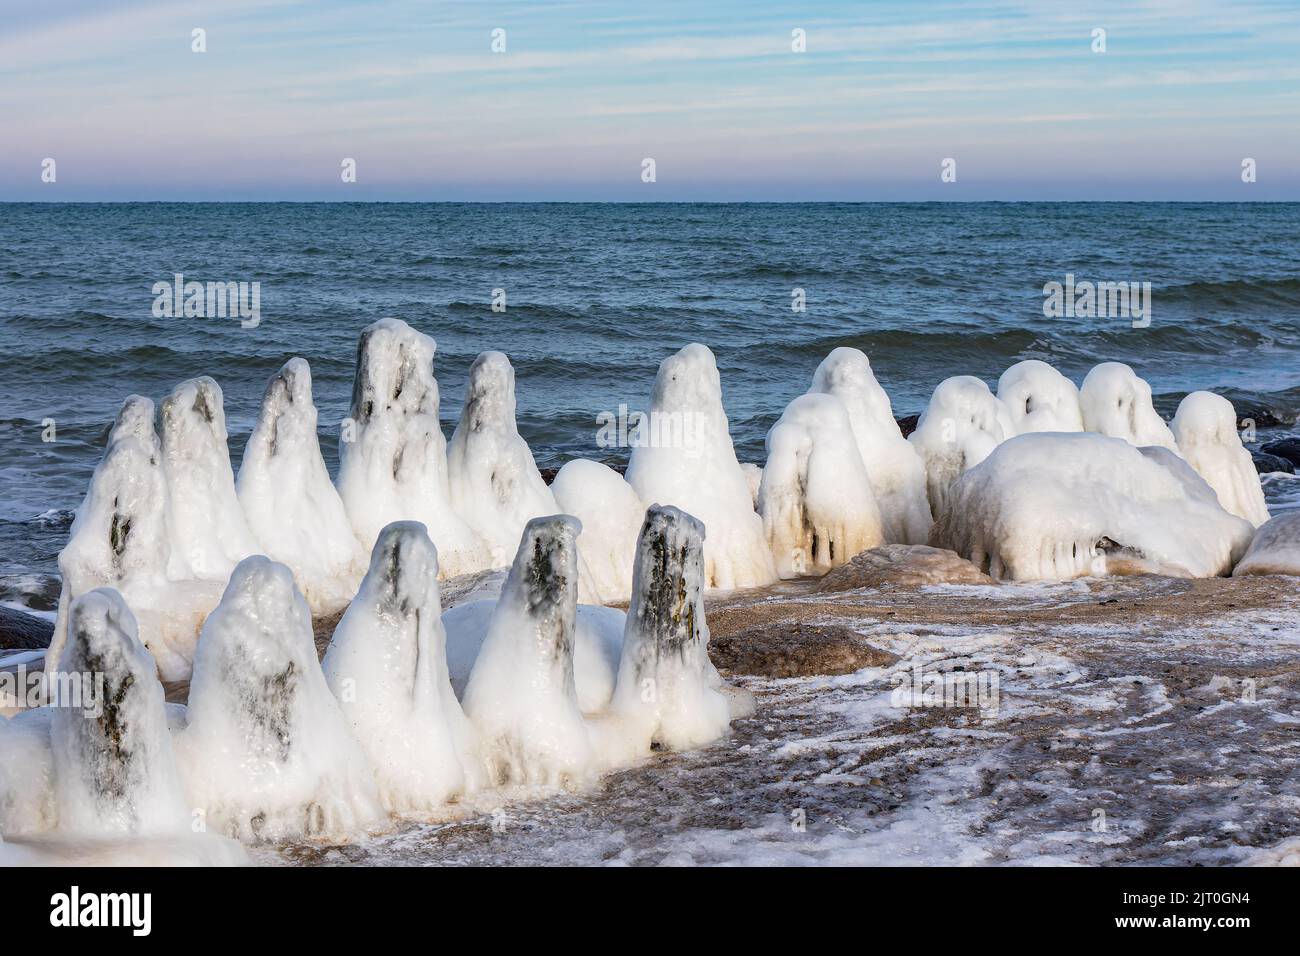 Groyne in wintertime on the Baltic Sea coast near Kuehlungsborn, Germany. Stock Photo